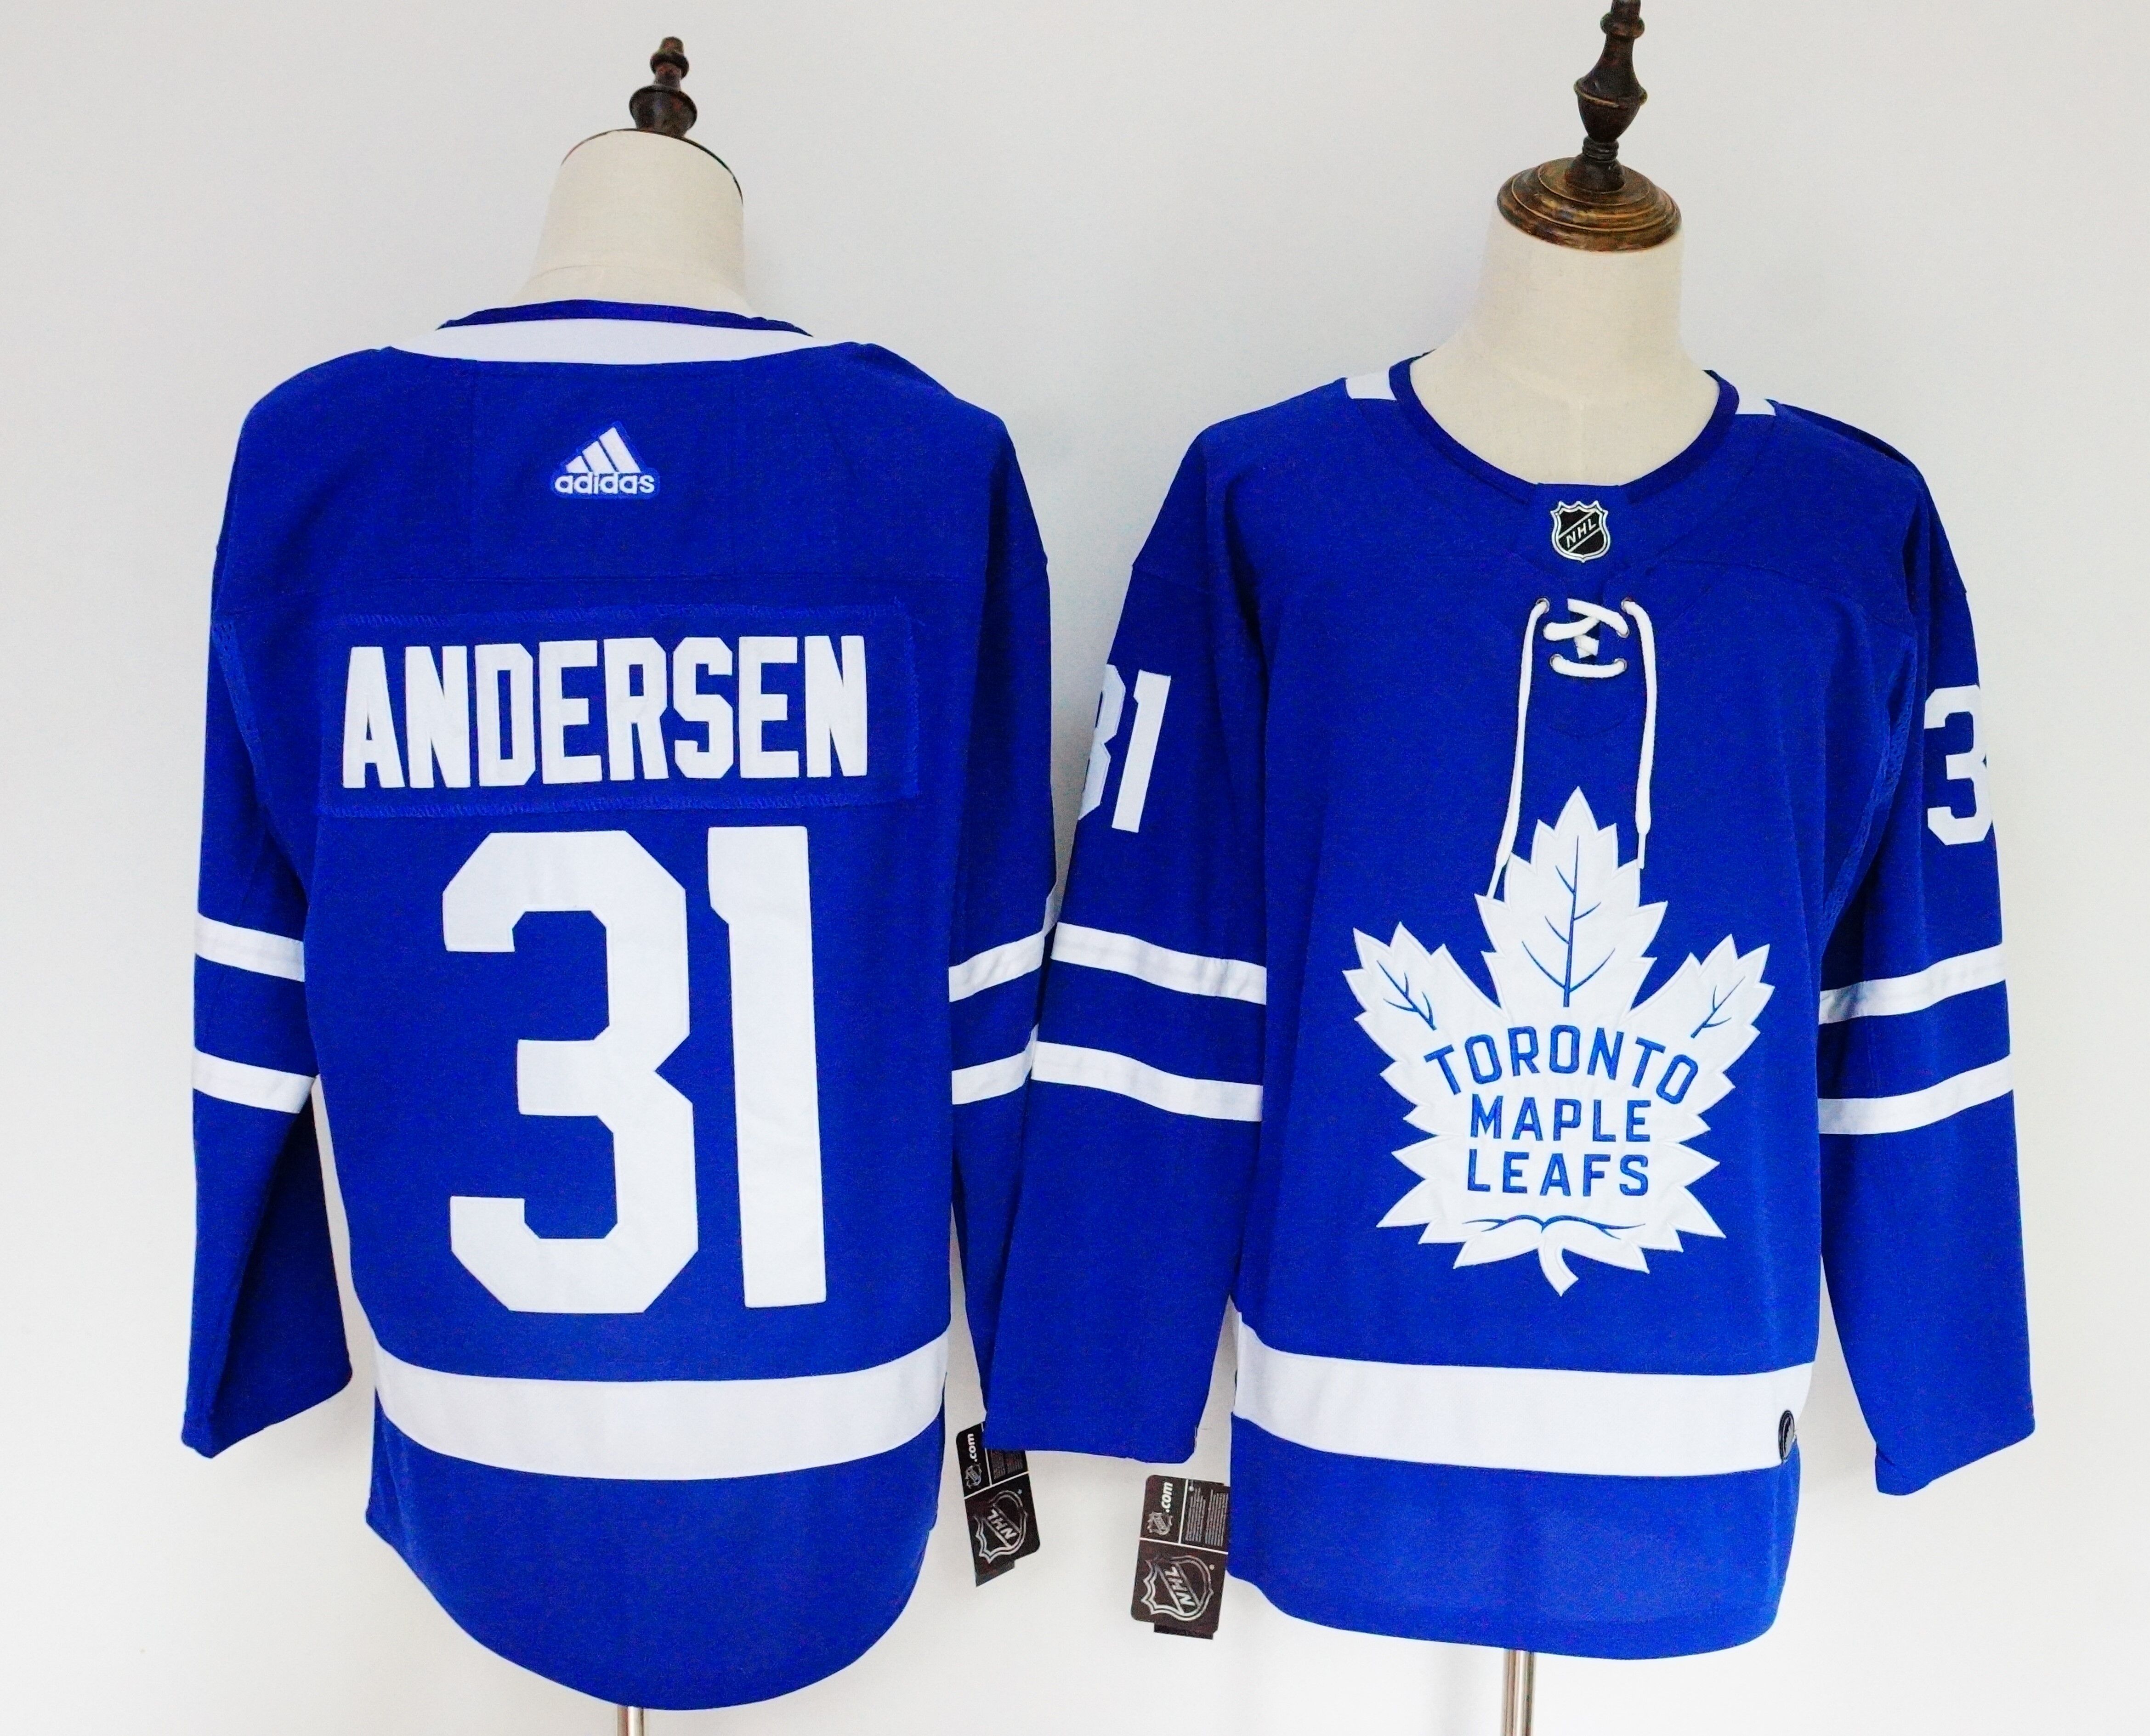 Maple-Leafs-31-Frederik-Andersen-Blue-Youth-Adidas-Jersey-7562-51203.jpg